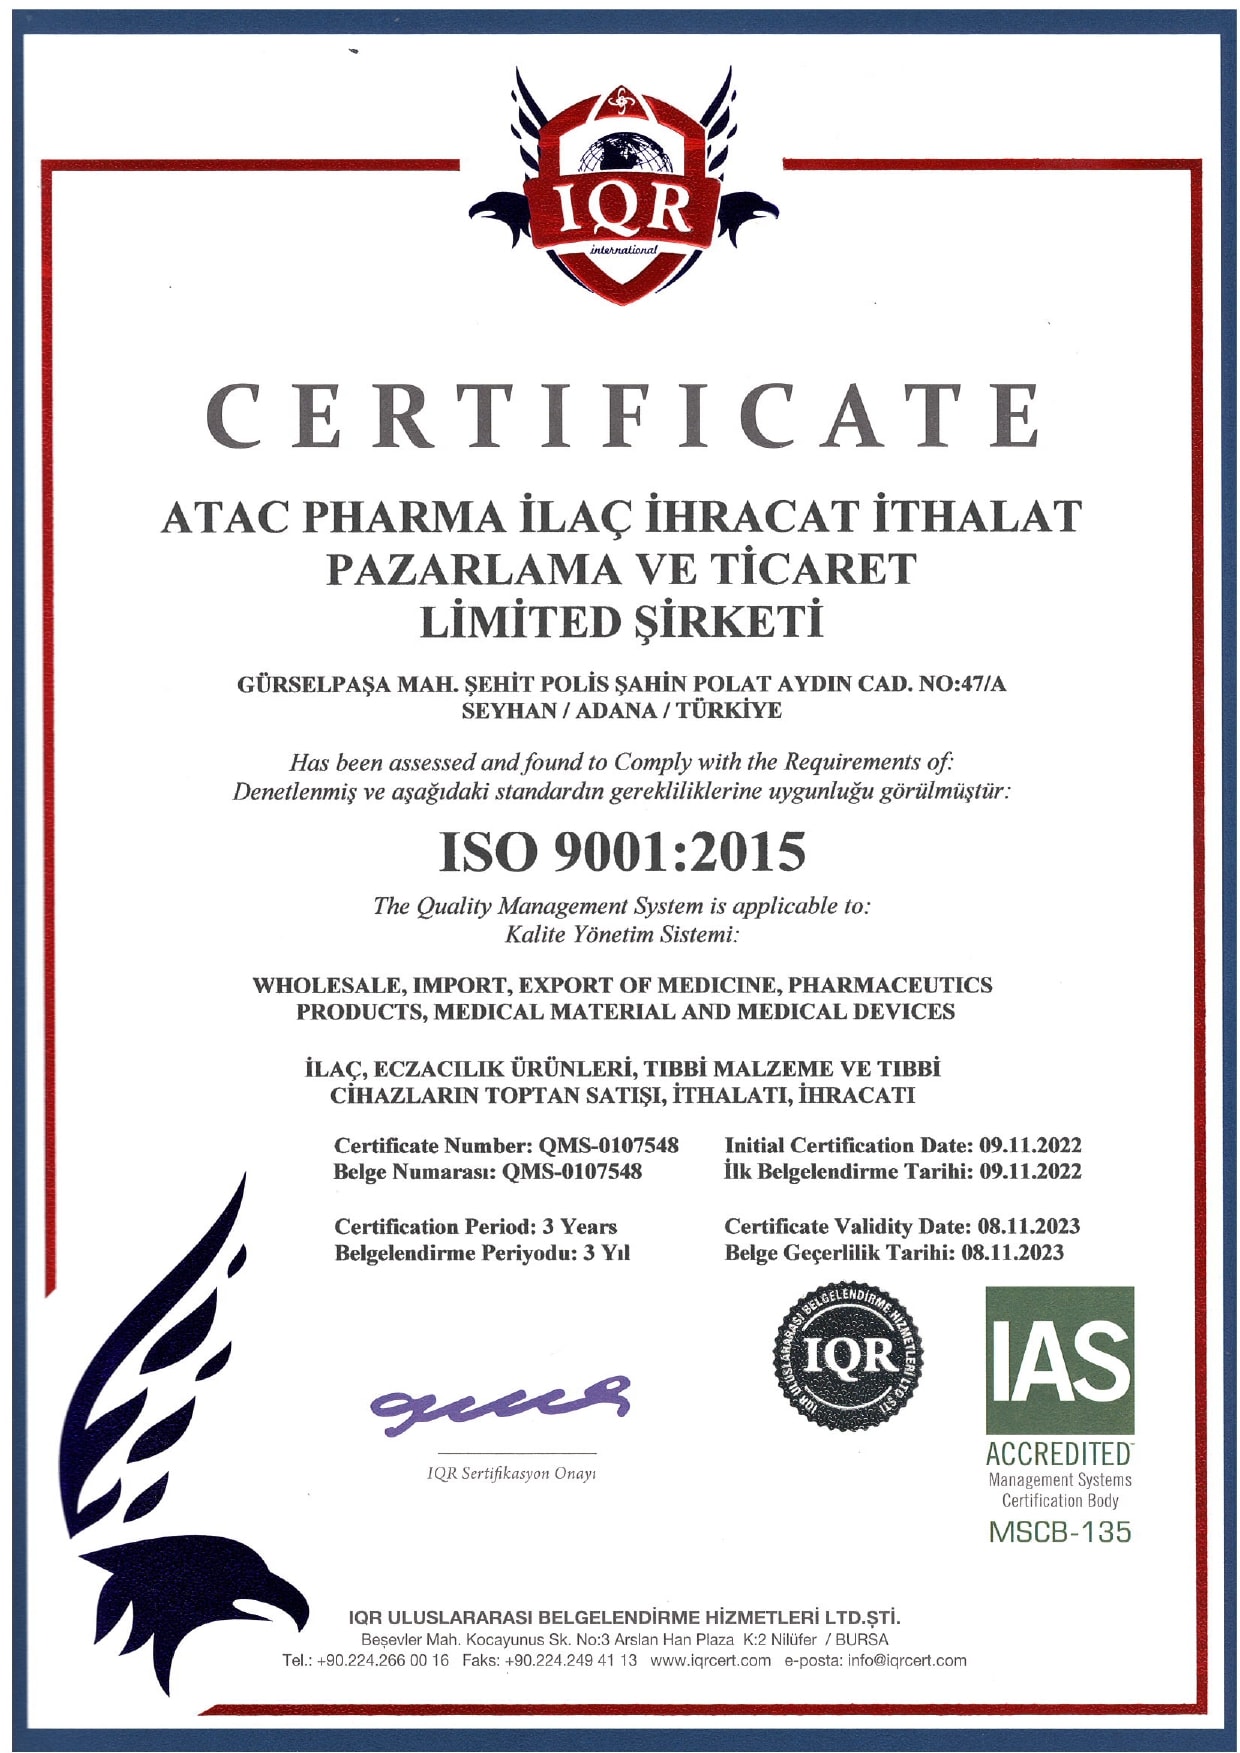 ATAC PHARMA ISO 9001 quality policy